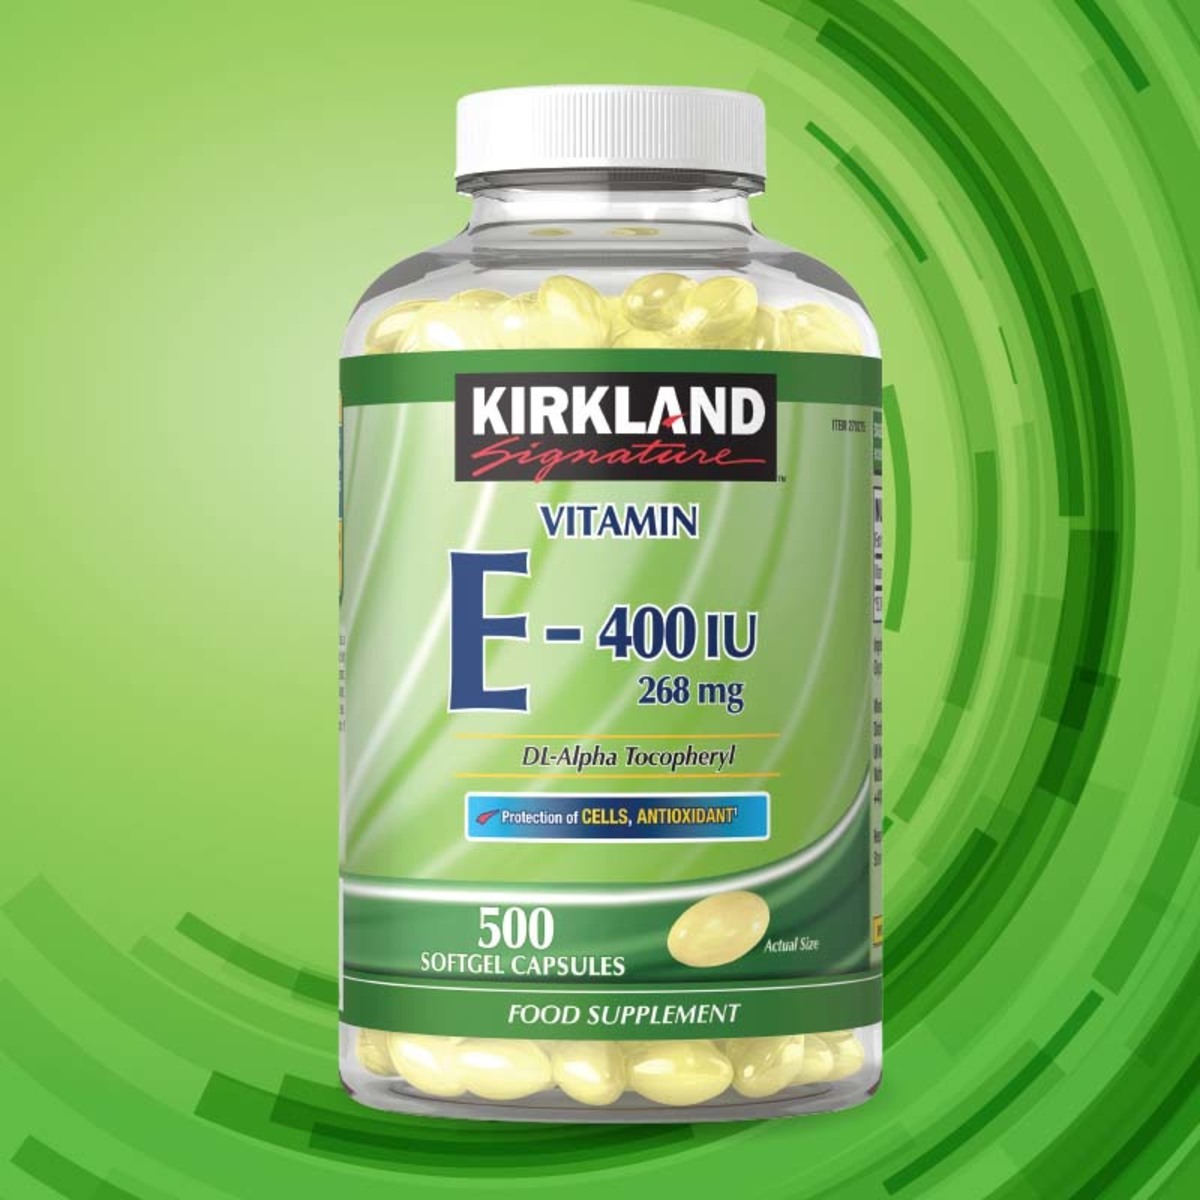 Kirkland Signature Vitamin E 268mg 400 I.U., 500 Softgel Capsules